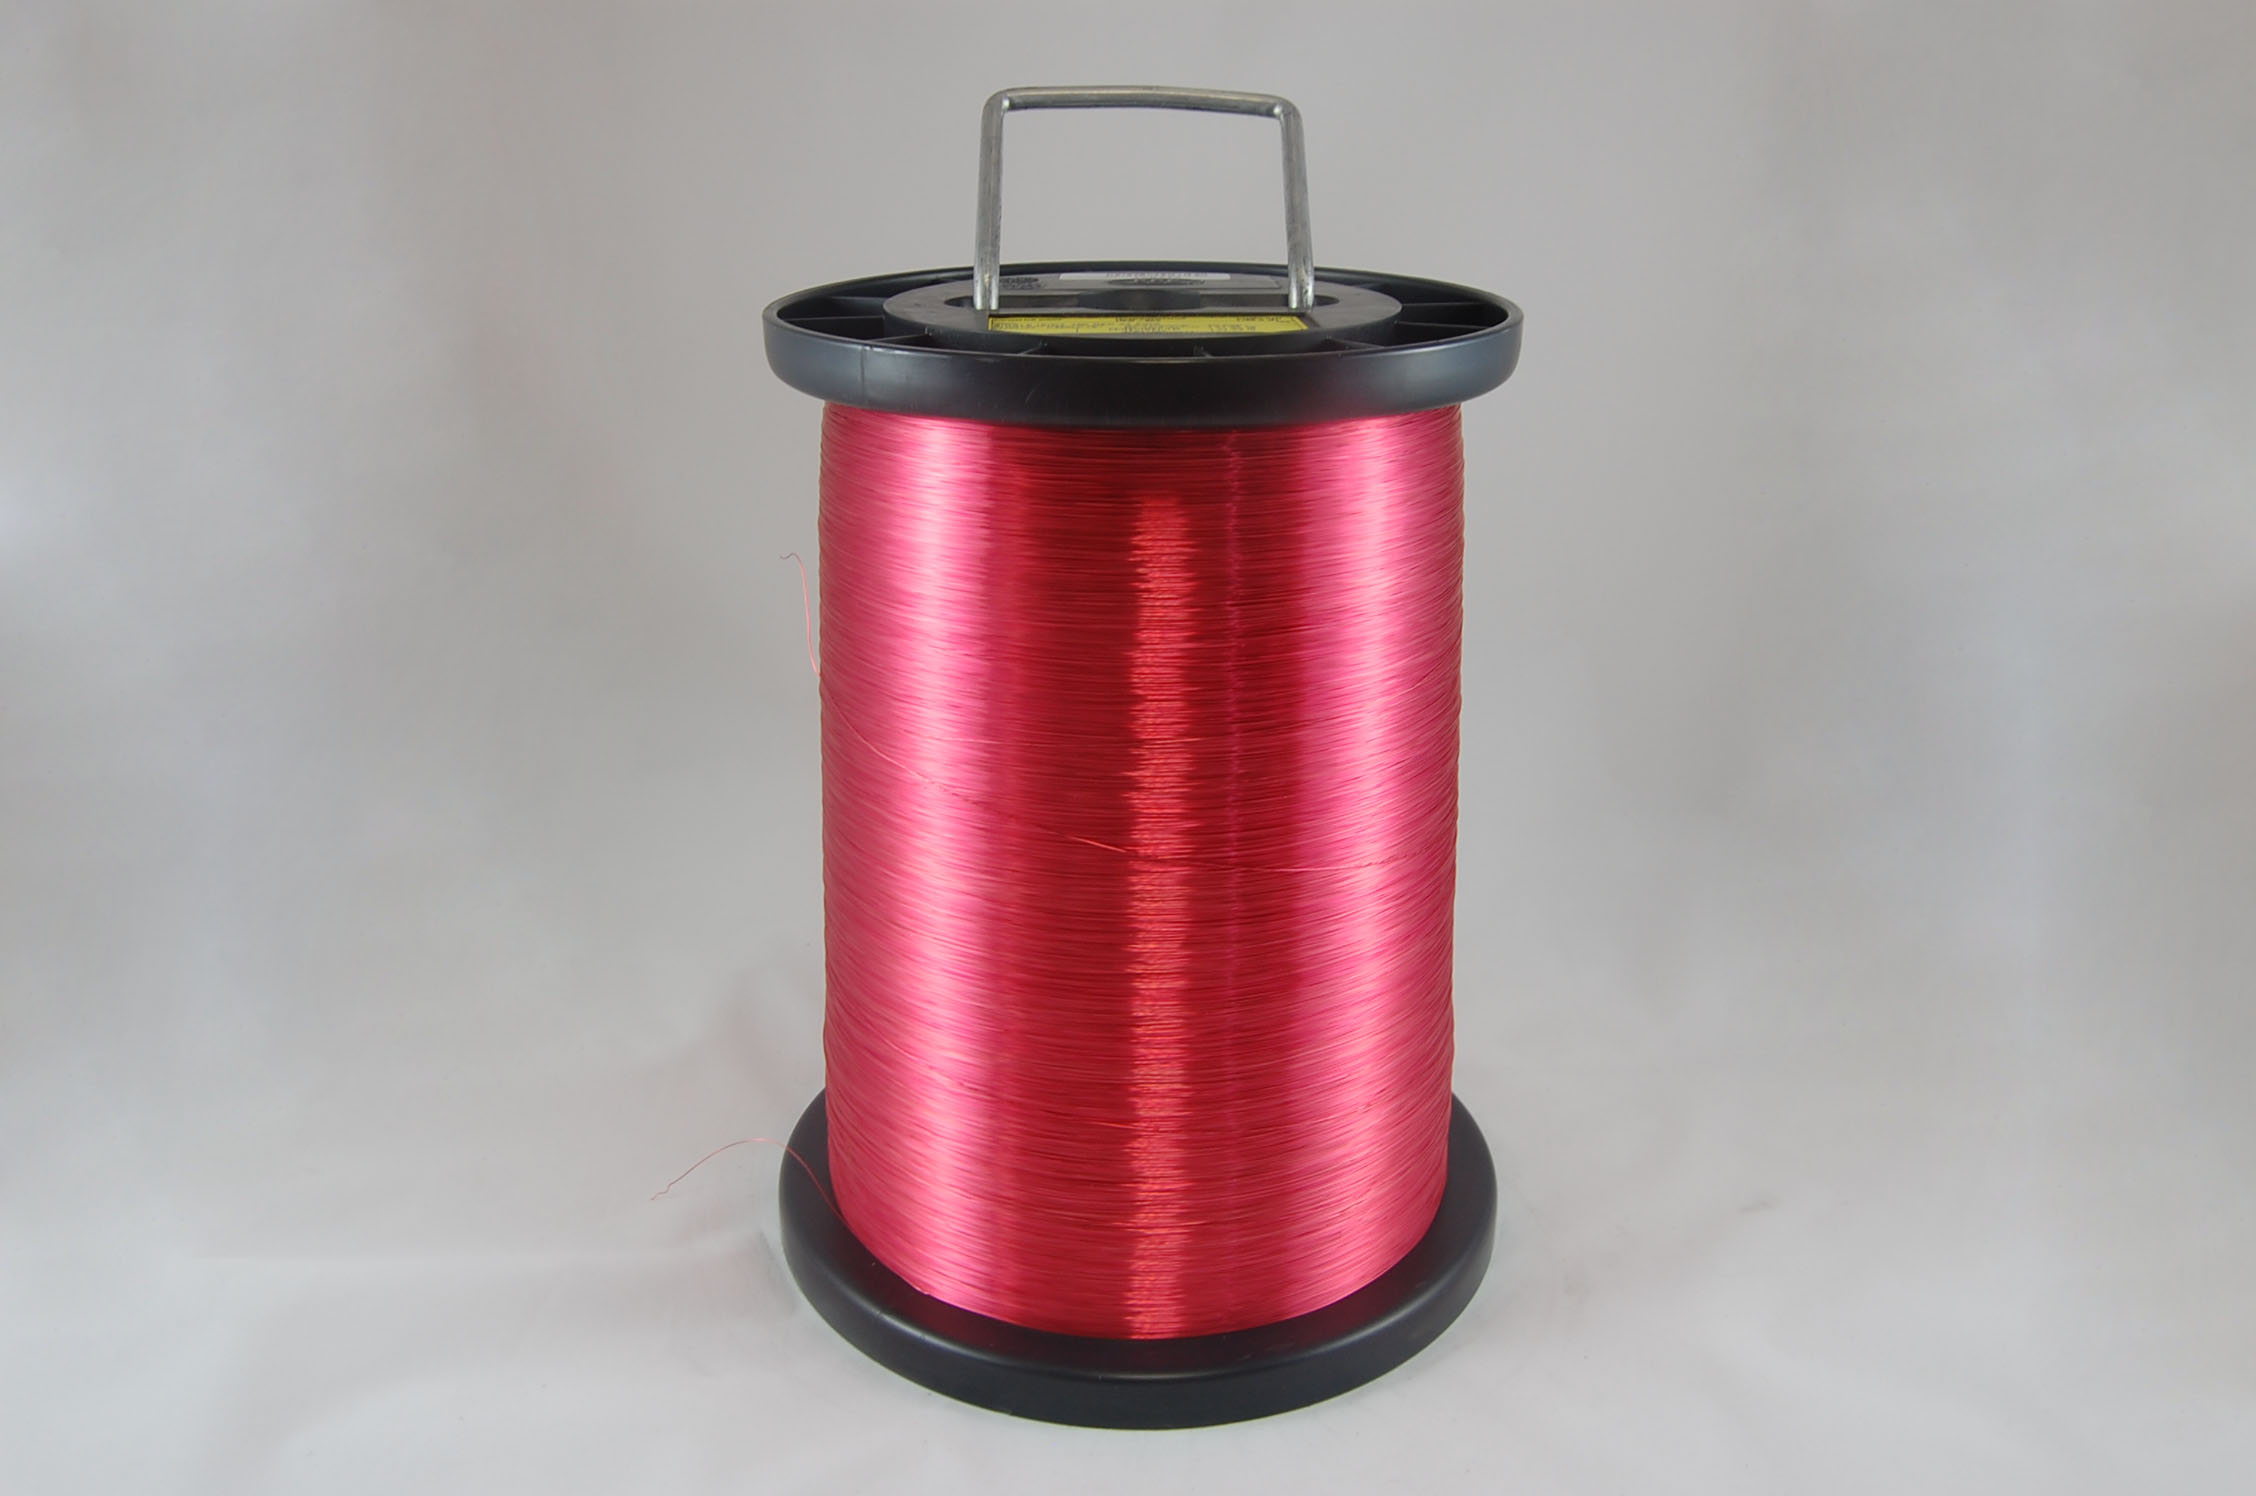 #16 Heavy INVEMID 200 Round MW 35 Copper Magnet Wire 200°C, copper, 45 LB half pack pail (average wght.)